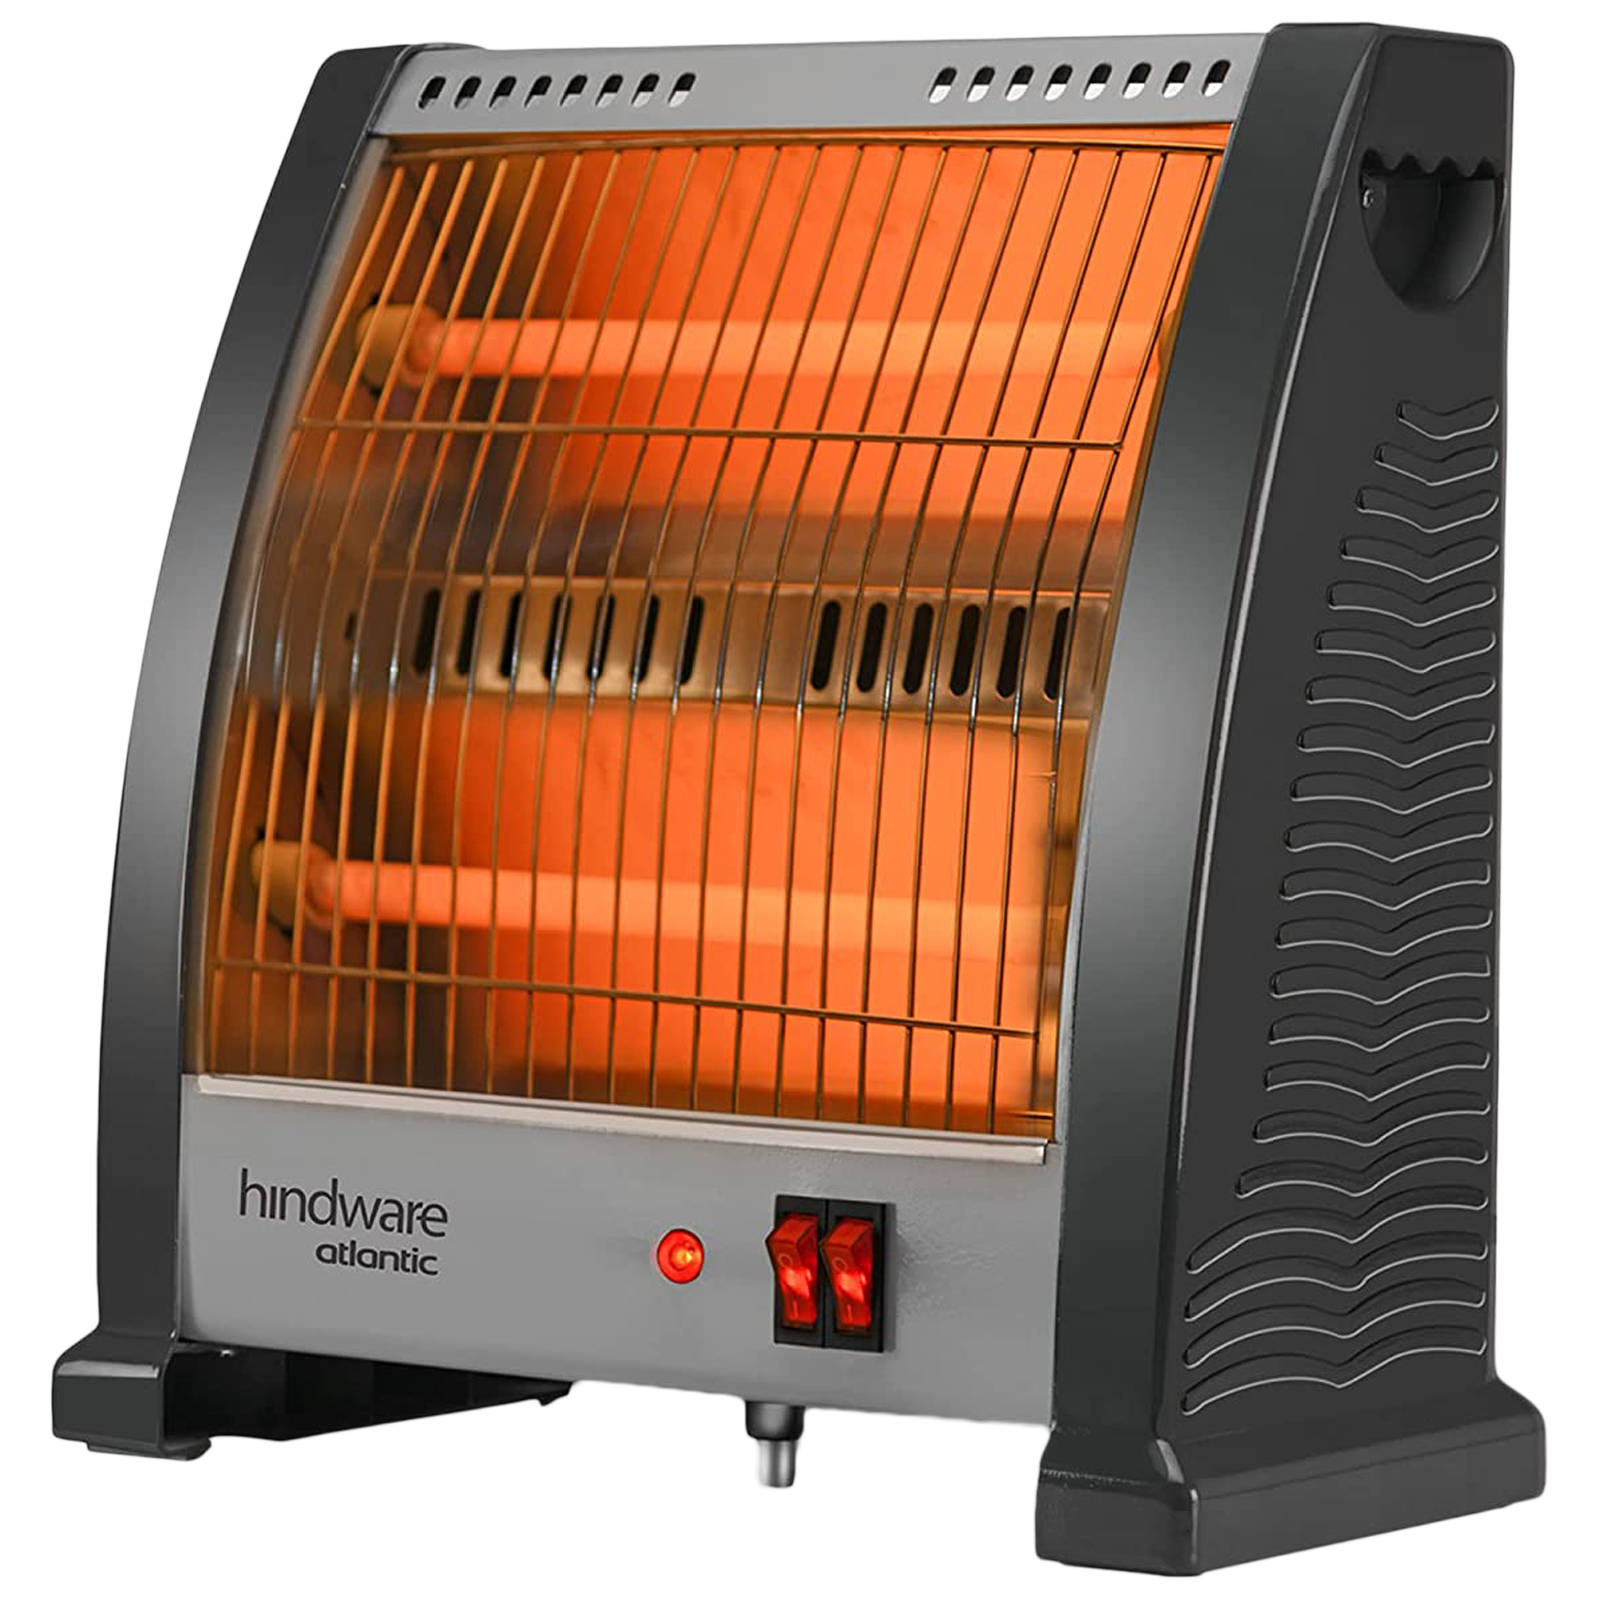 hindware Atlantic Ignitio 800 Watts Quartz Room Heater (Auto Cut Off, HQRHIN21GNL1, Grey)